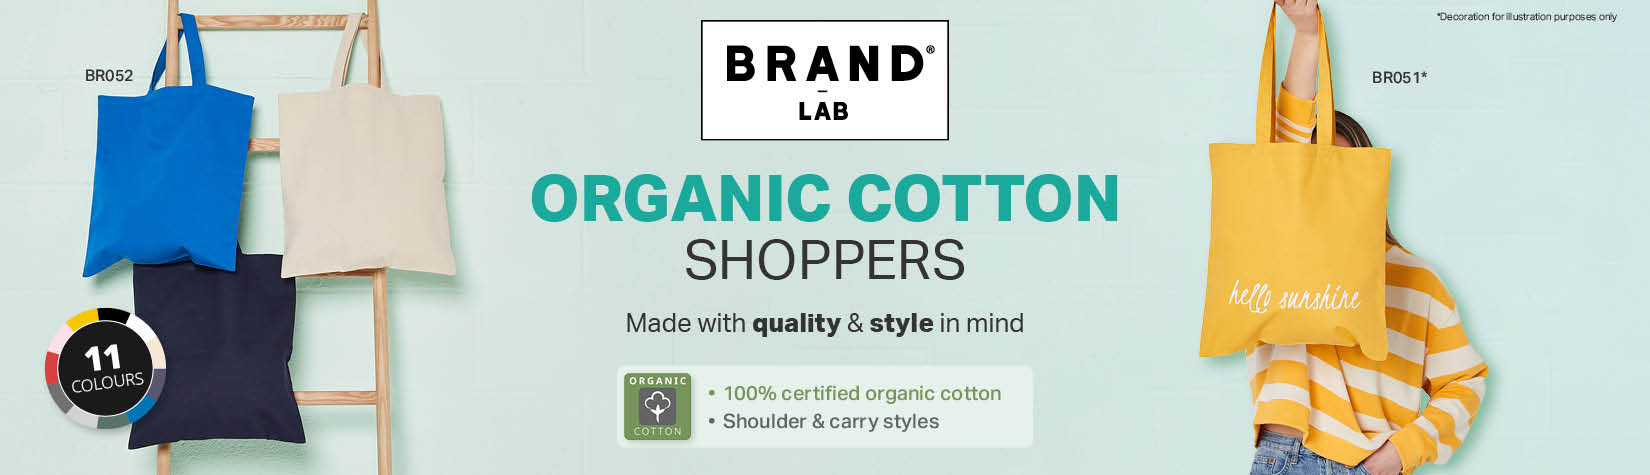 Brand Lab organic shoppers